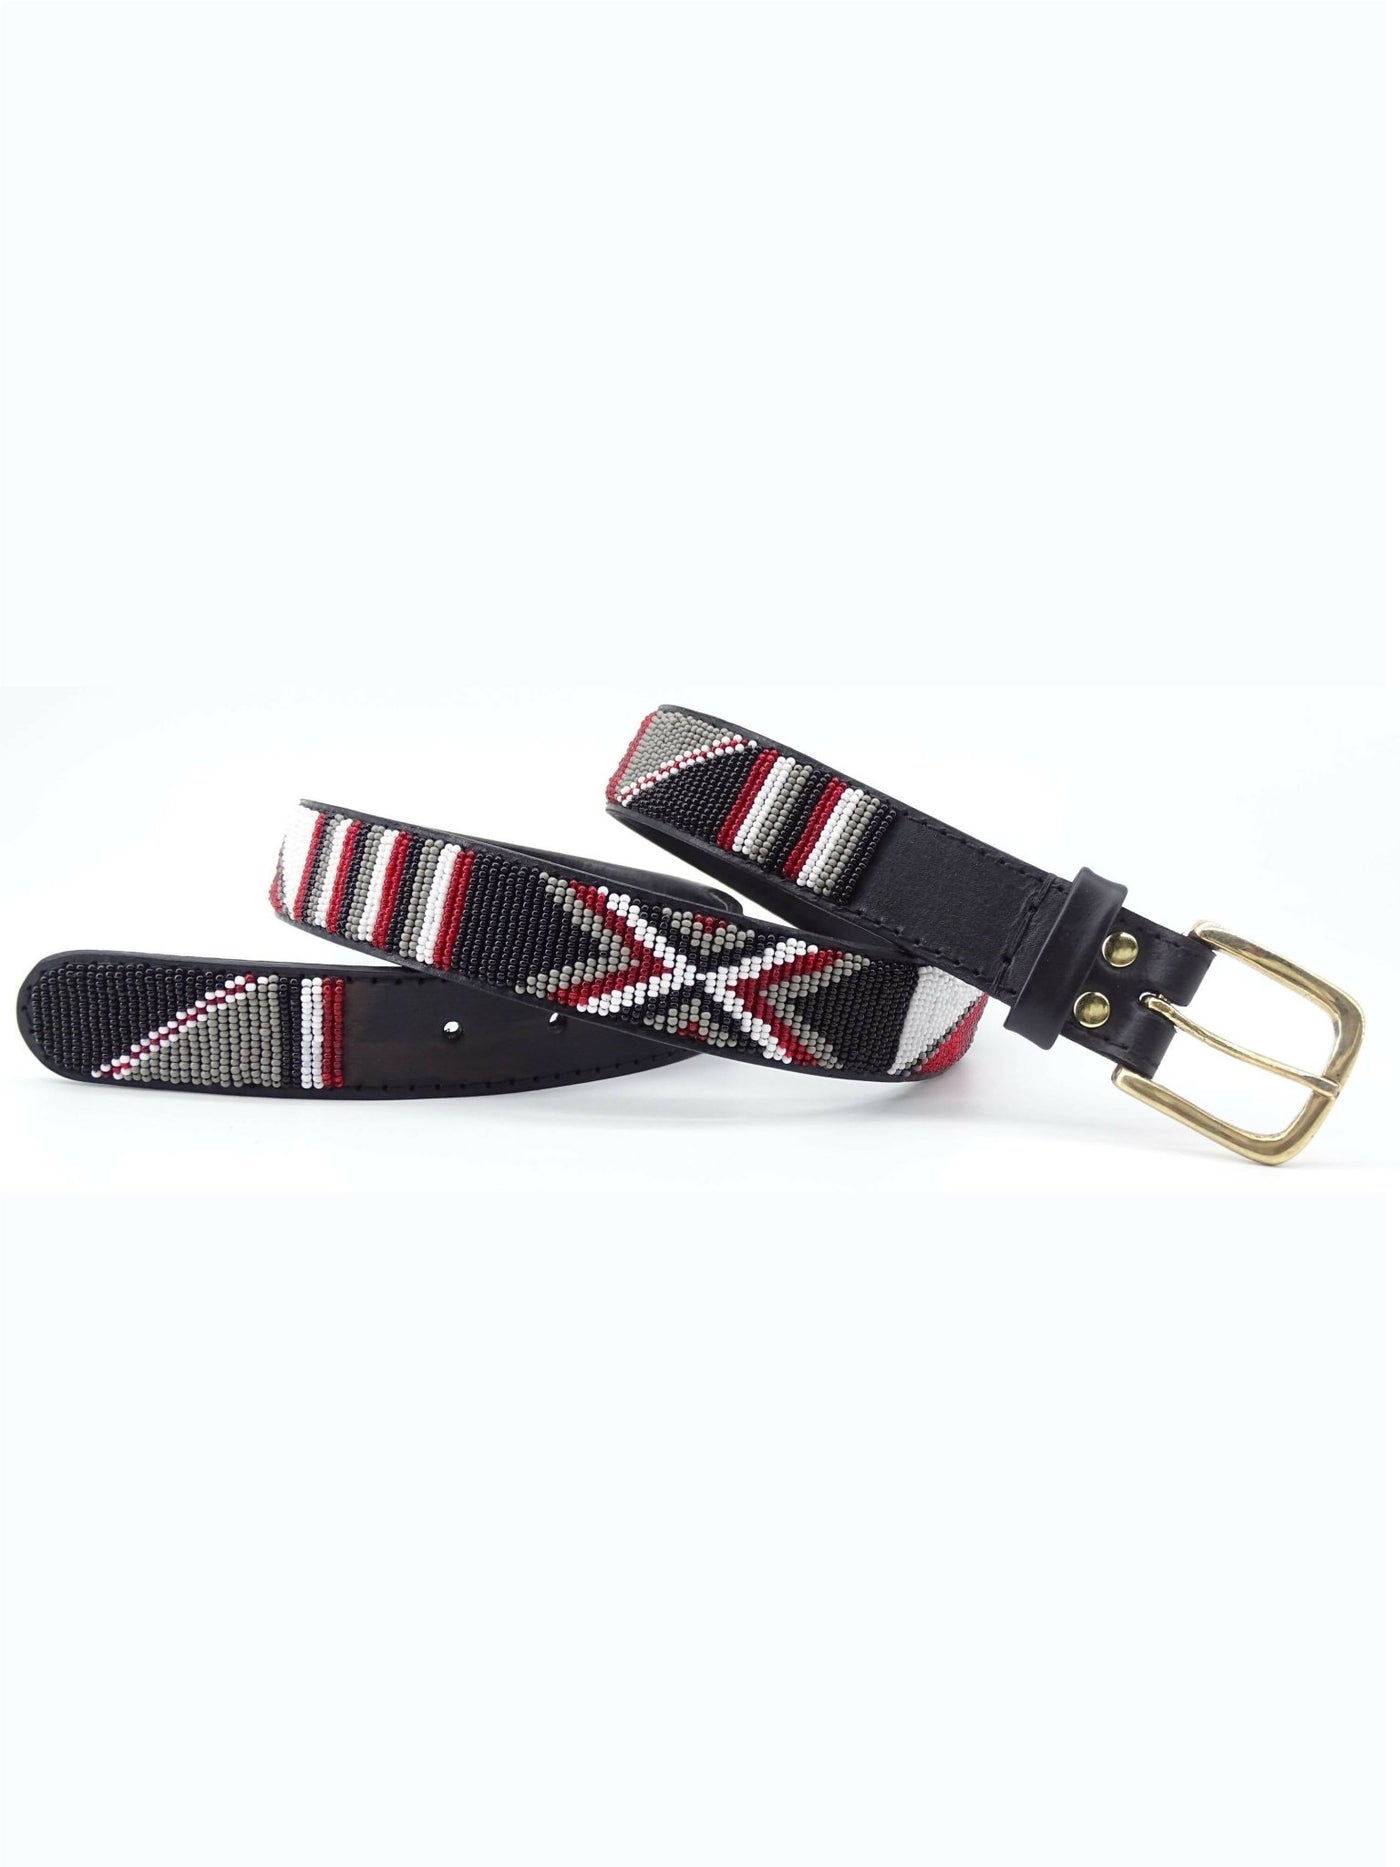 Azu's Casual 3cm Beaded Belt - Red / White / Grey / Black B17-4 - Shopzetu